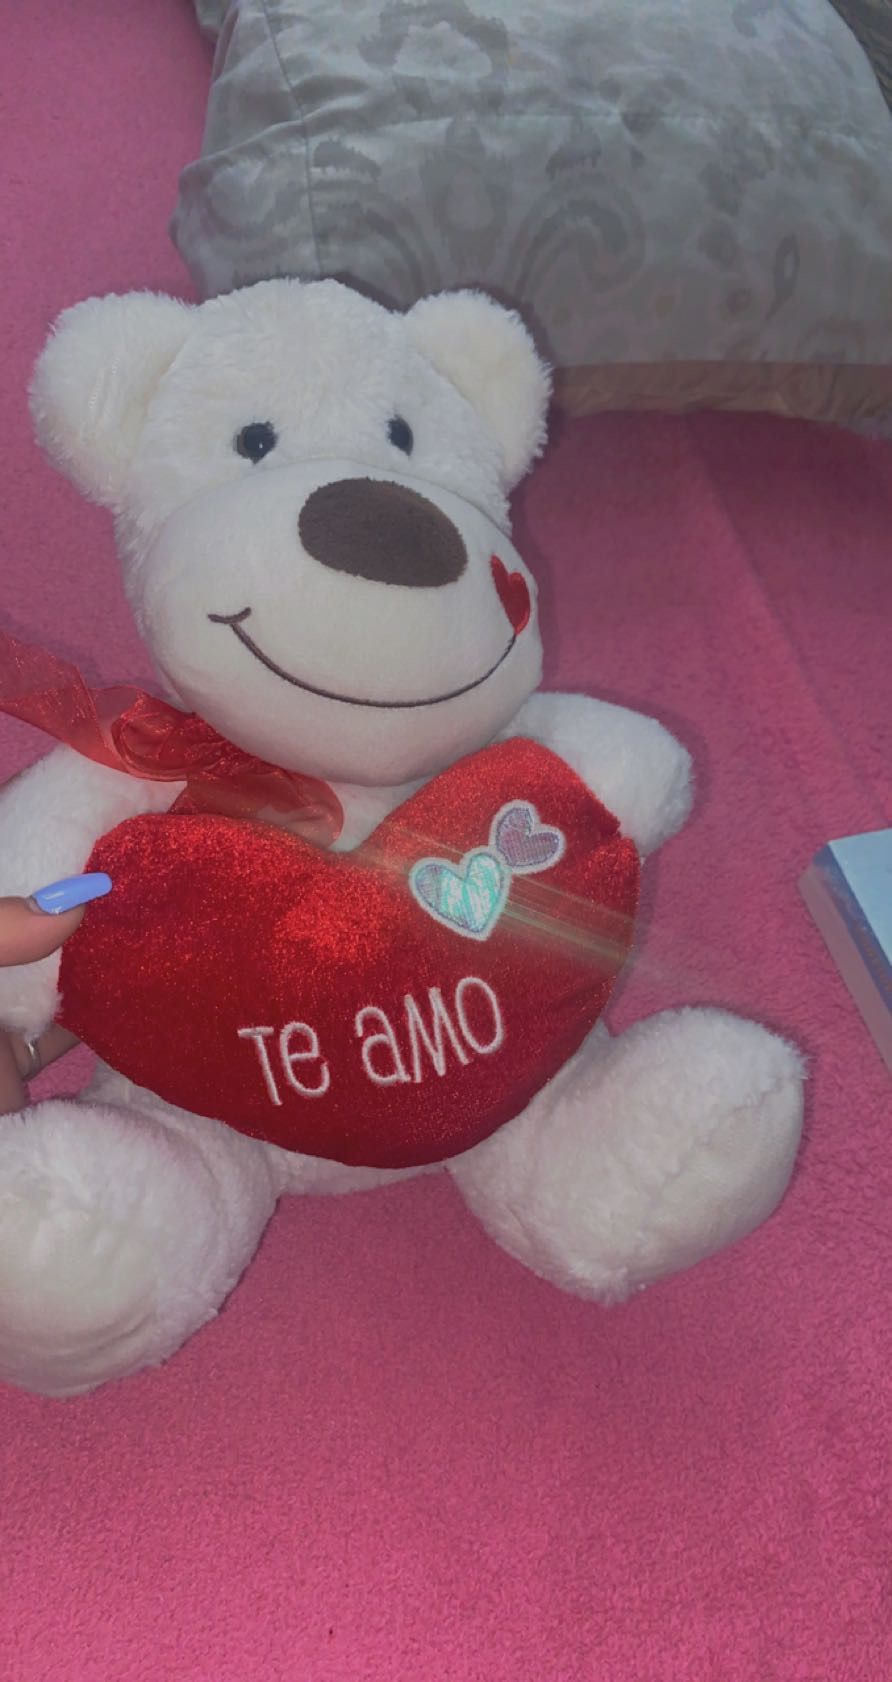 “Te amo” Teddy bear